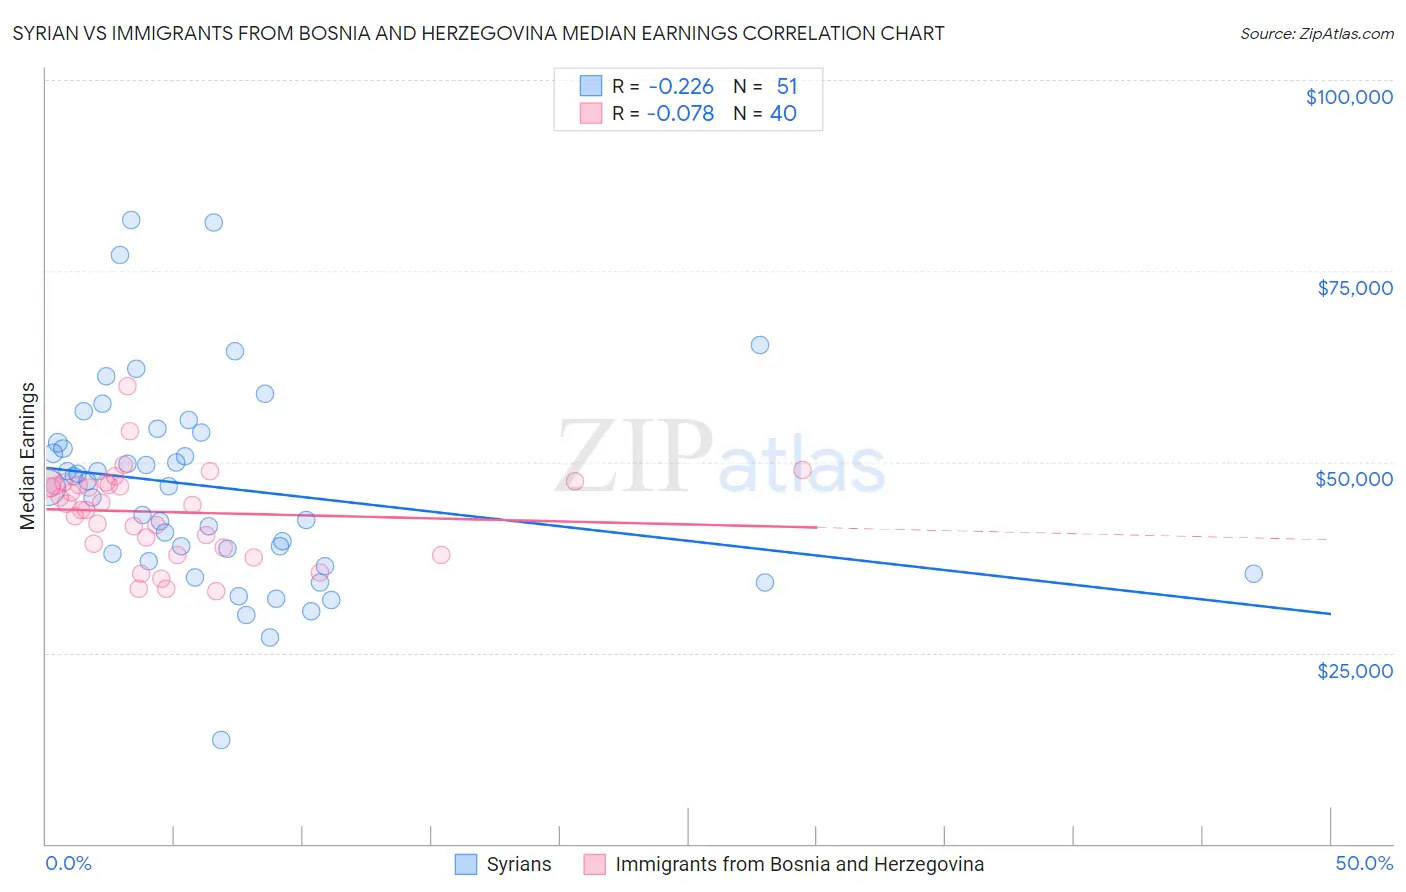 Syrian vs Immigrants from Bosnia and Herzegovina Median Earnings